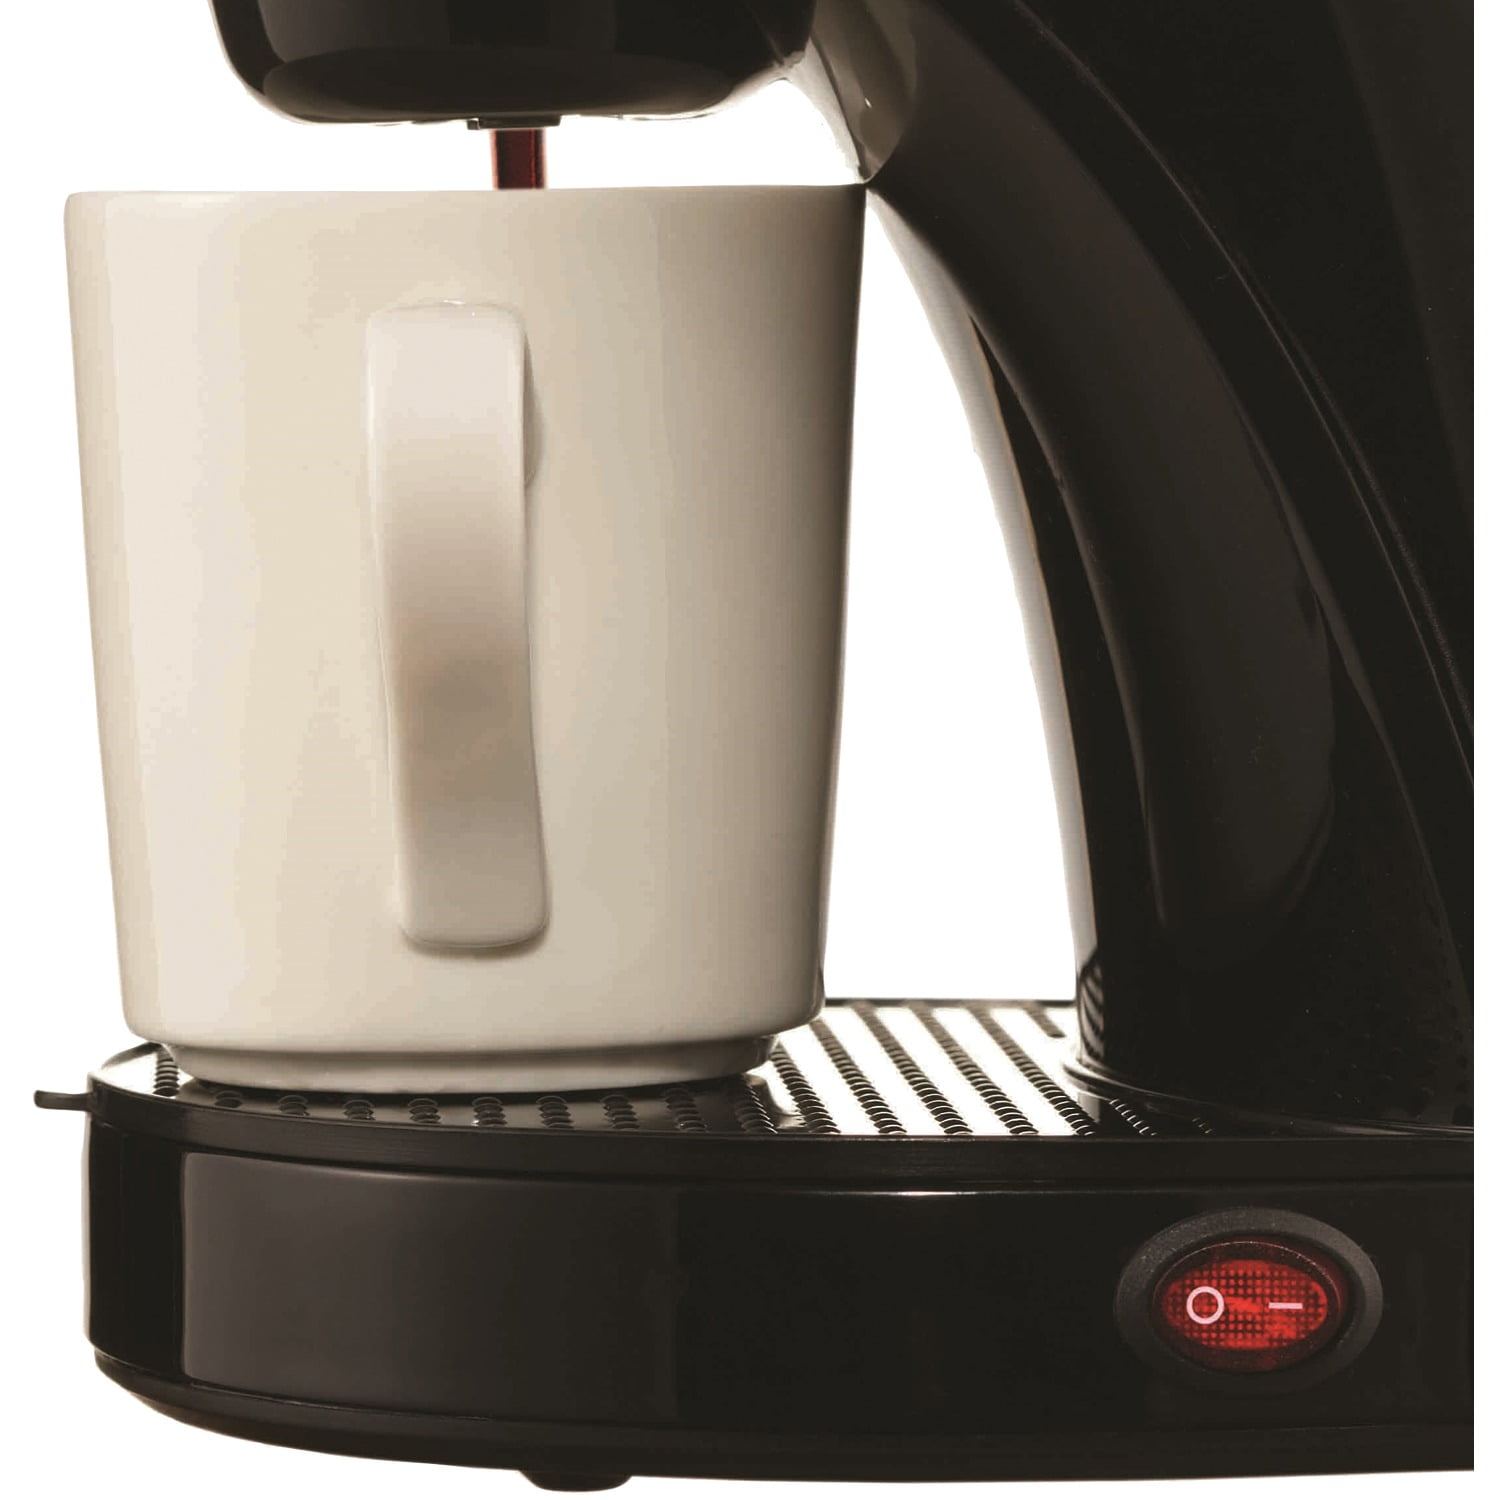 Brentwood TS-111BK Single Serve Coffee Maker with Mug